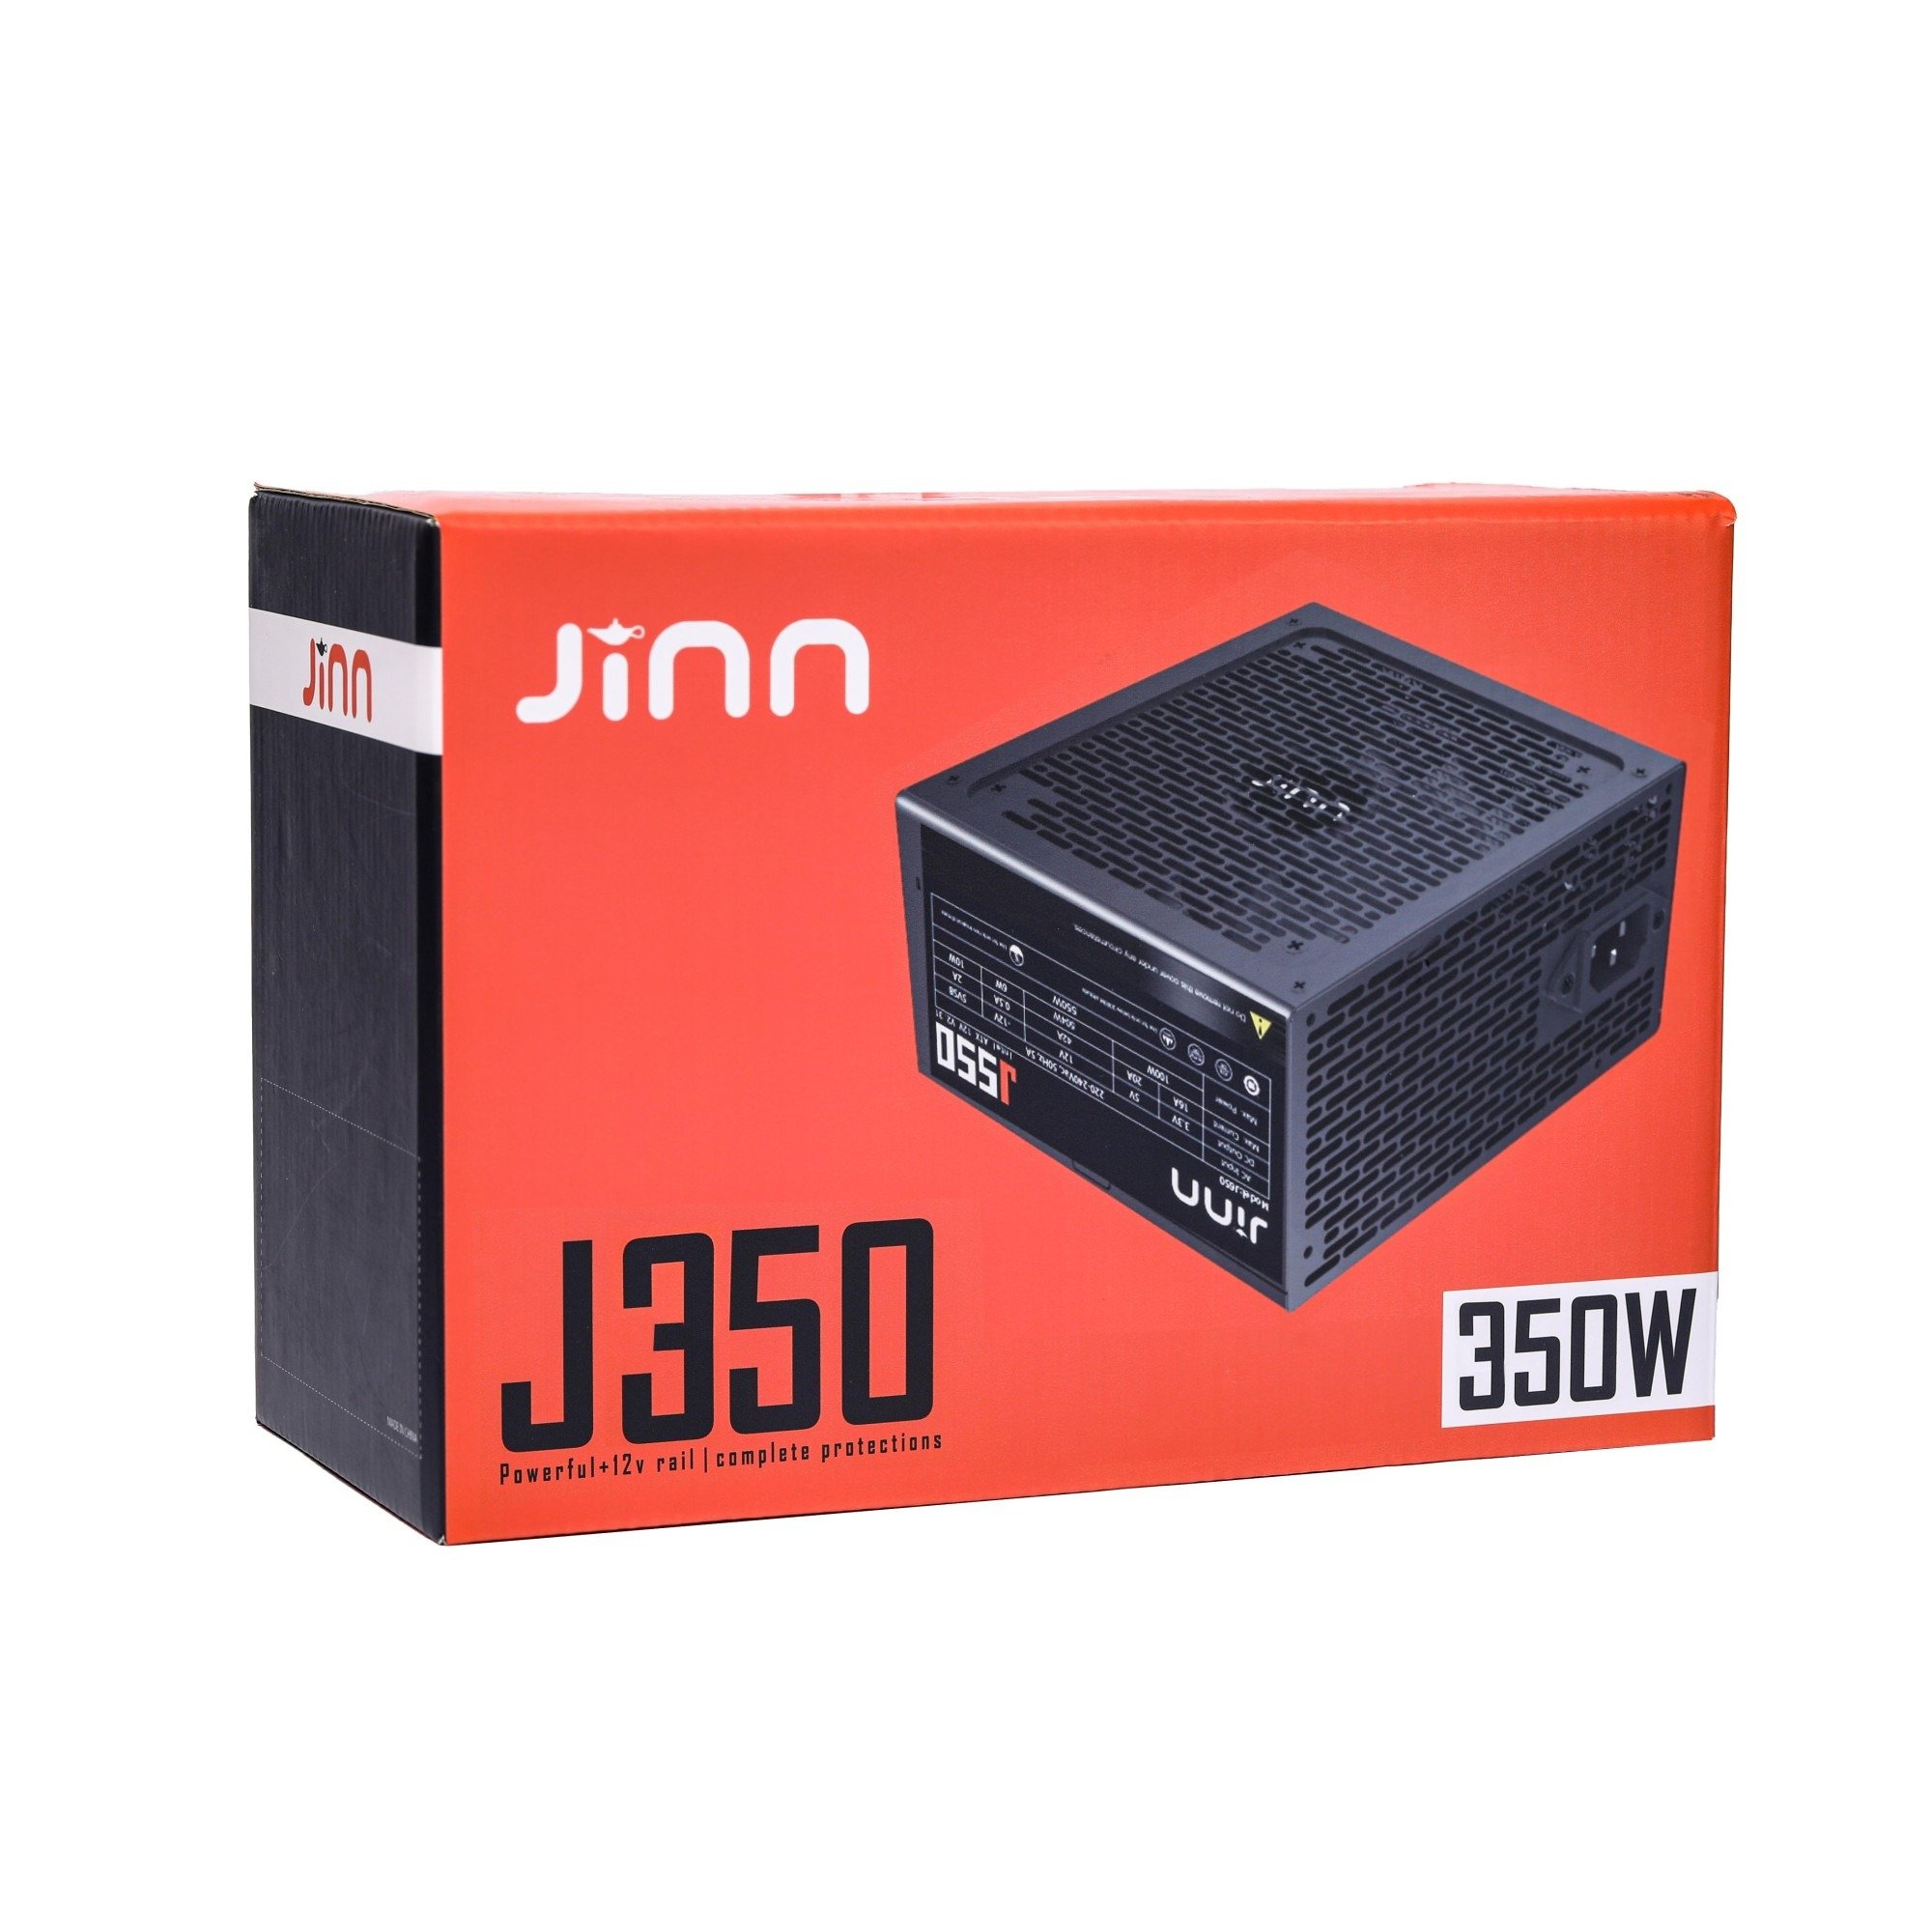 Nguồn Jinn 350W (J350)